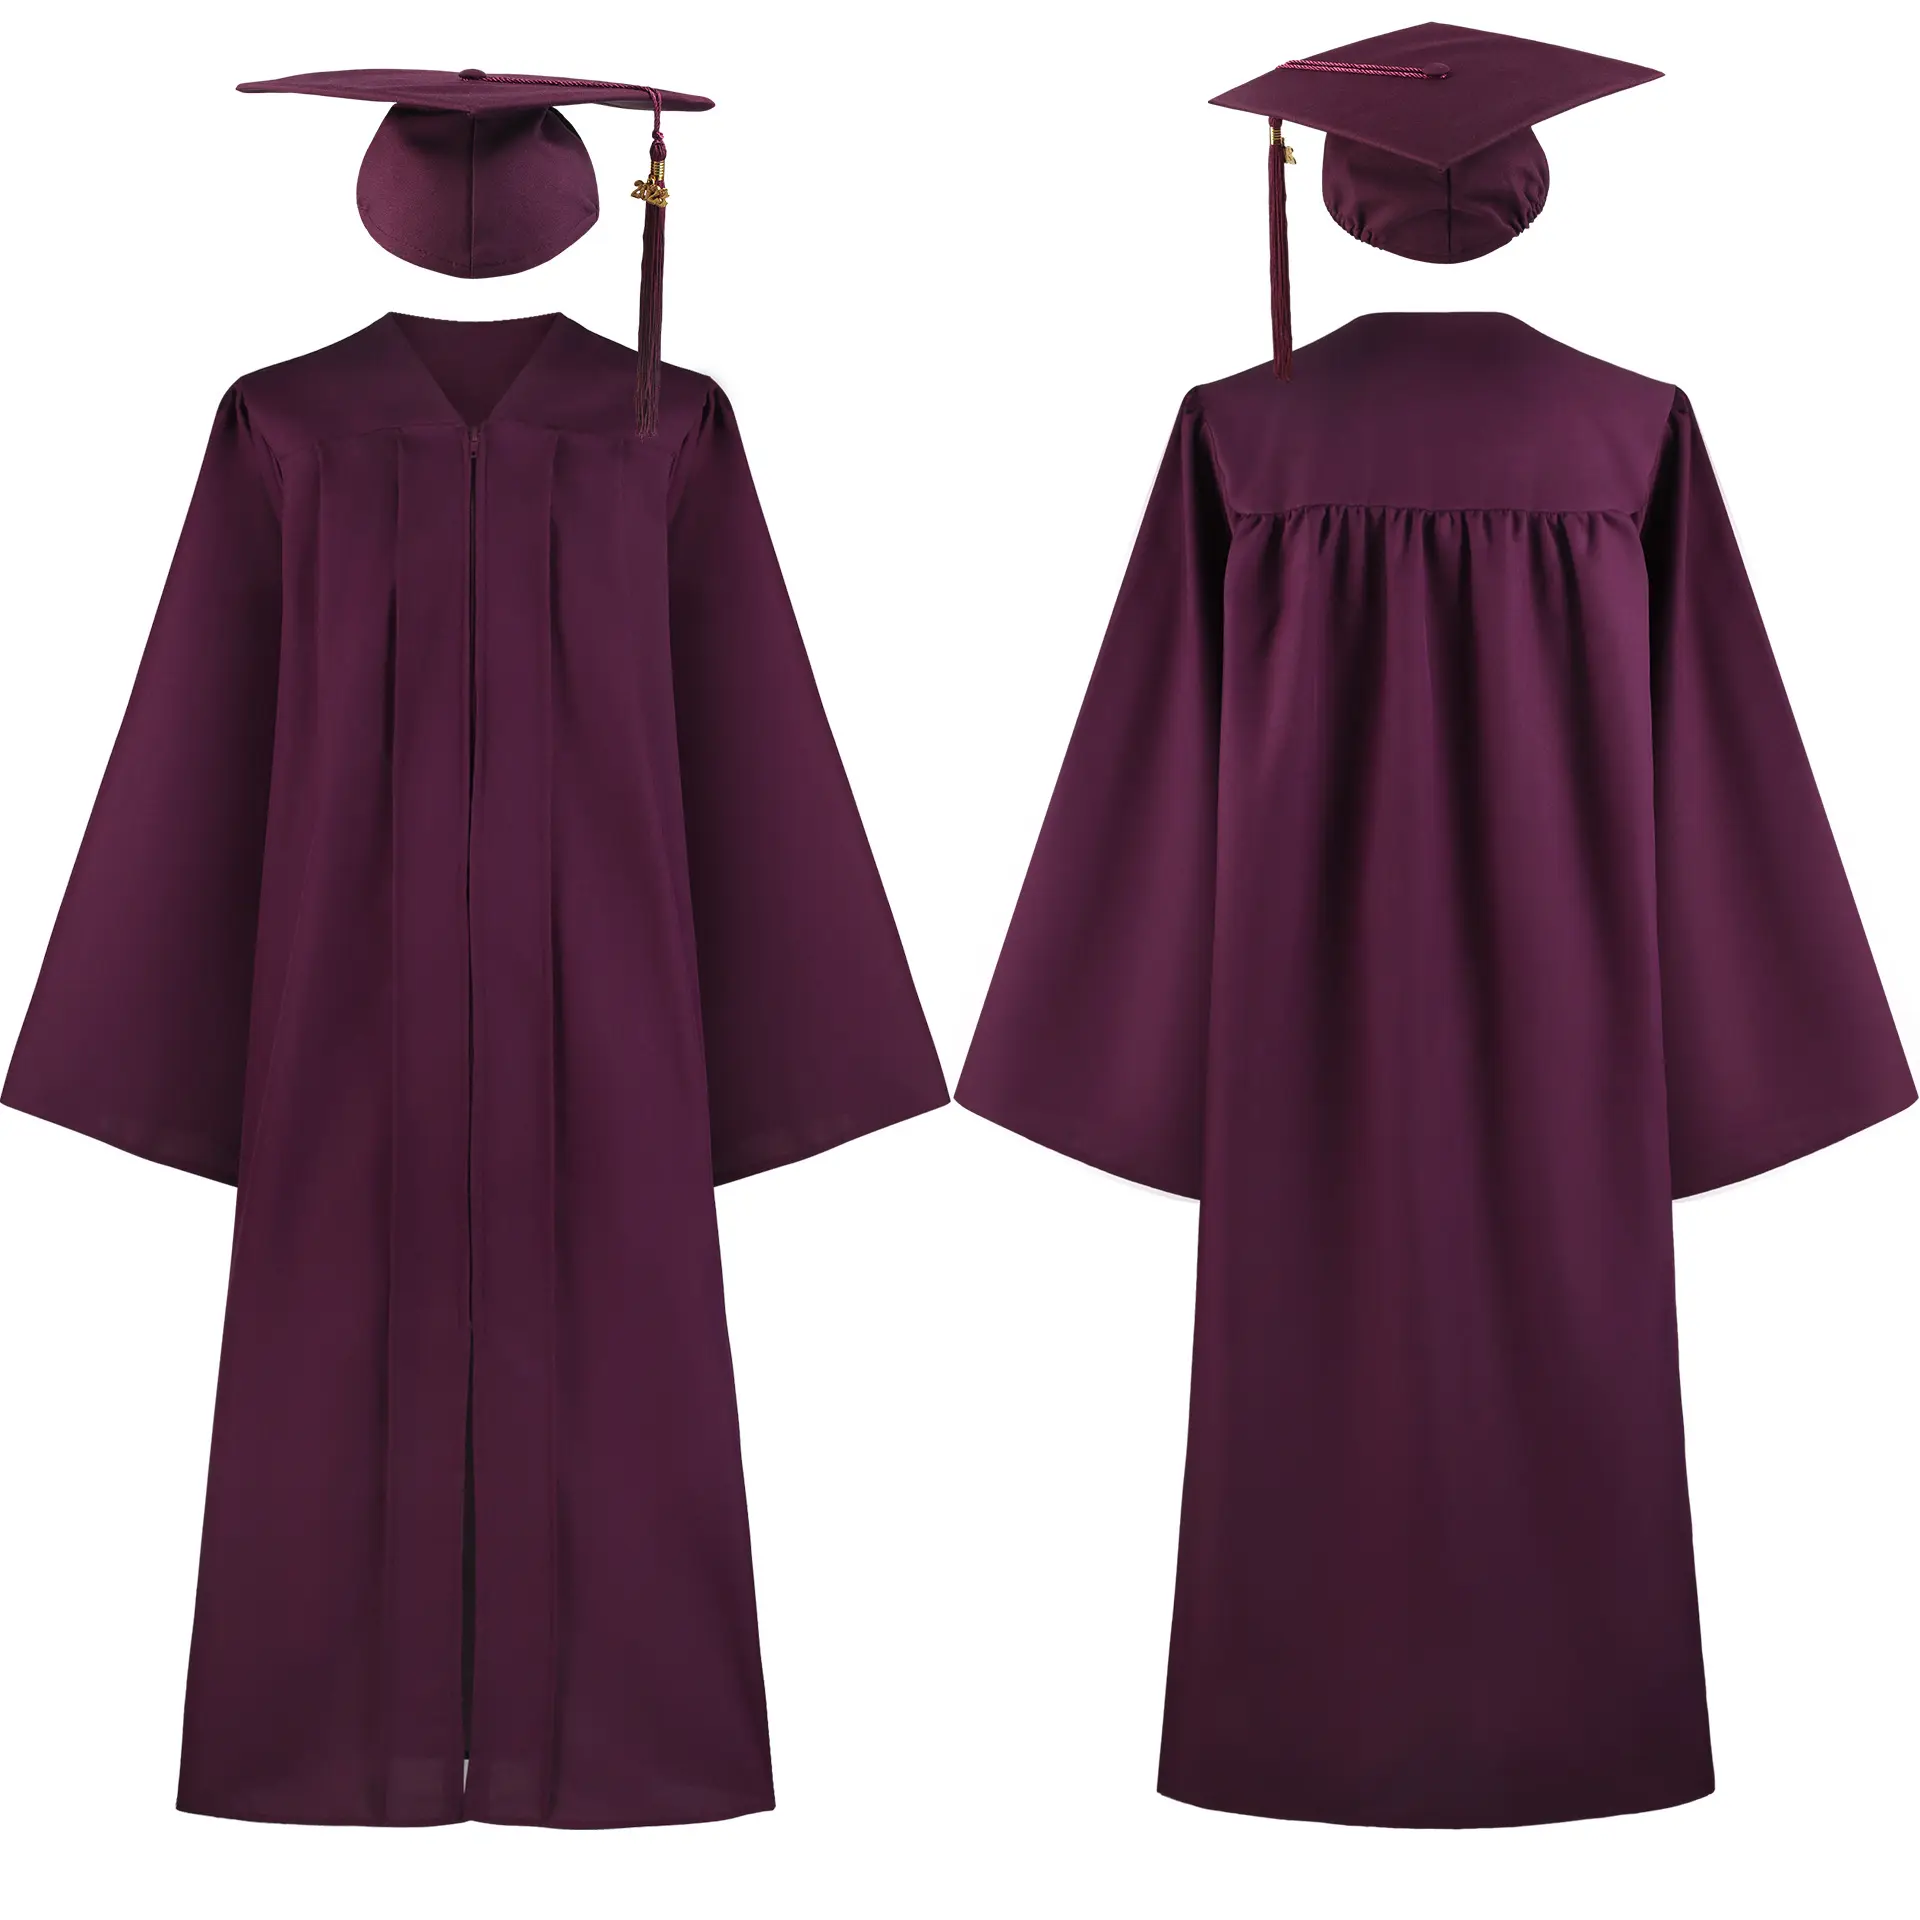 Lisans elbise yetişkin mezuniyet elbise avrupa ve amerikan lise kolej kostüm cosplay performans kostüm